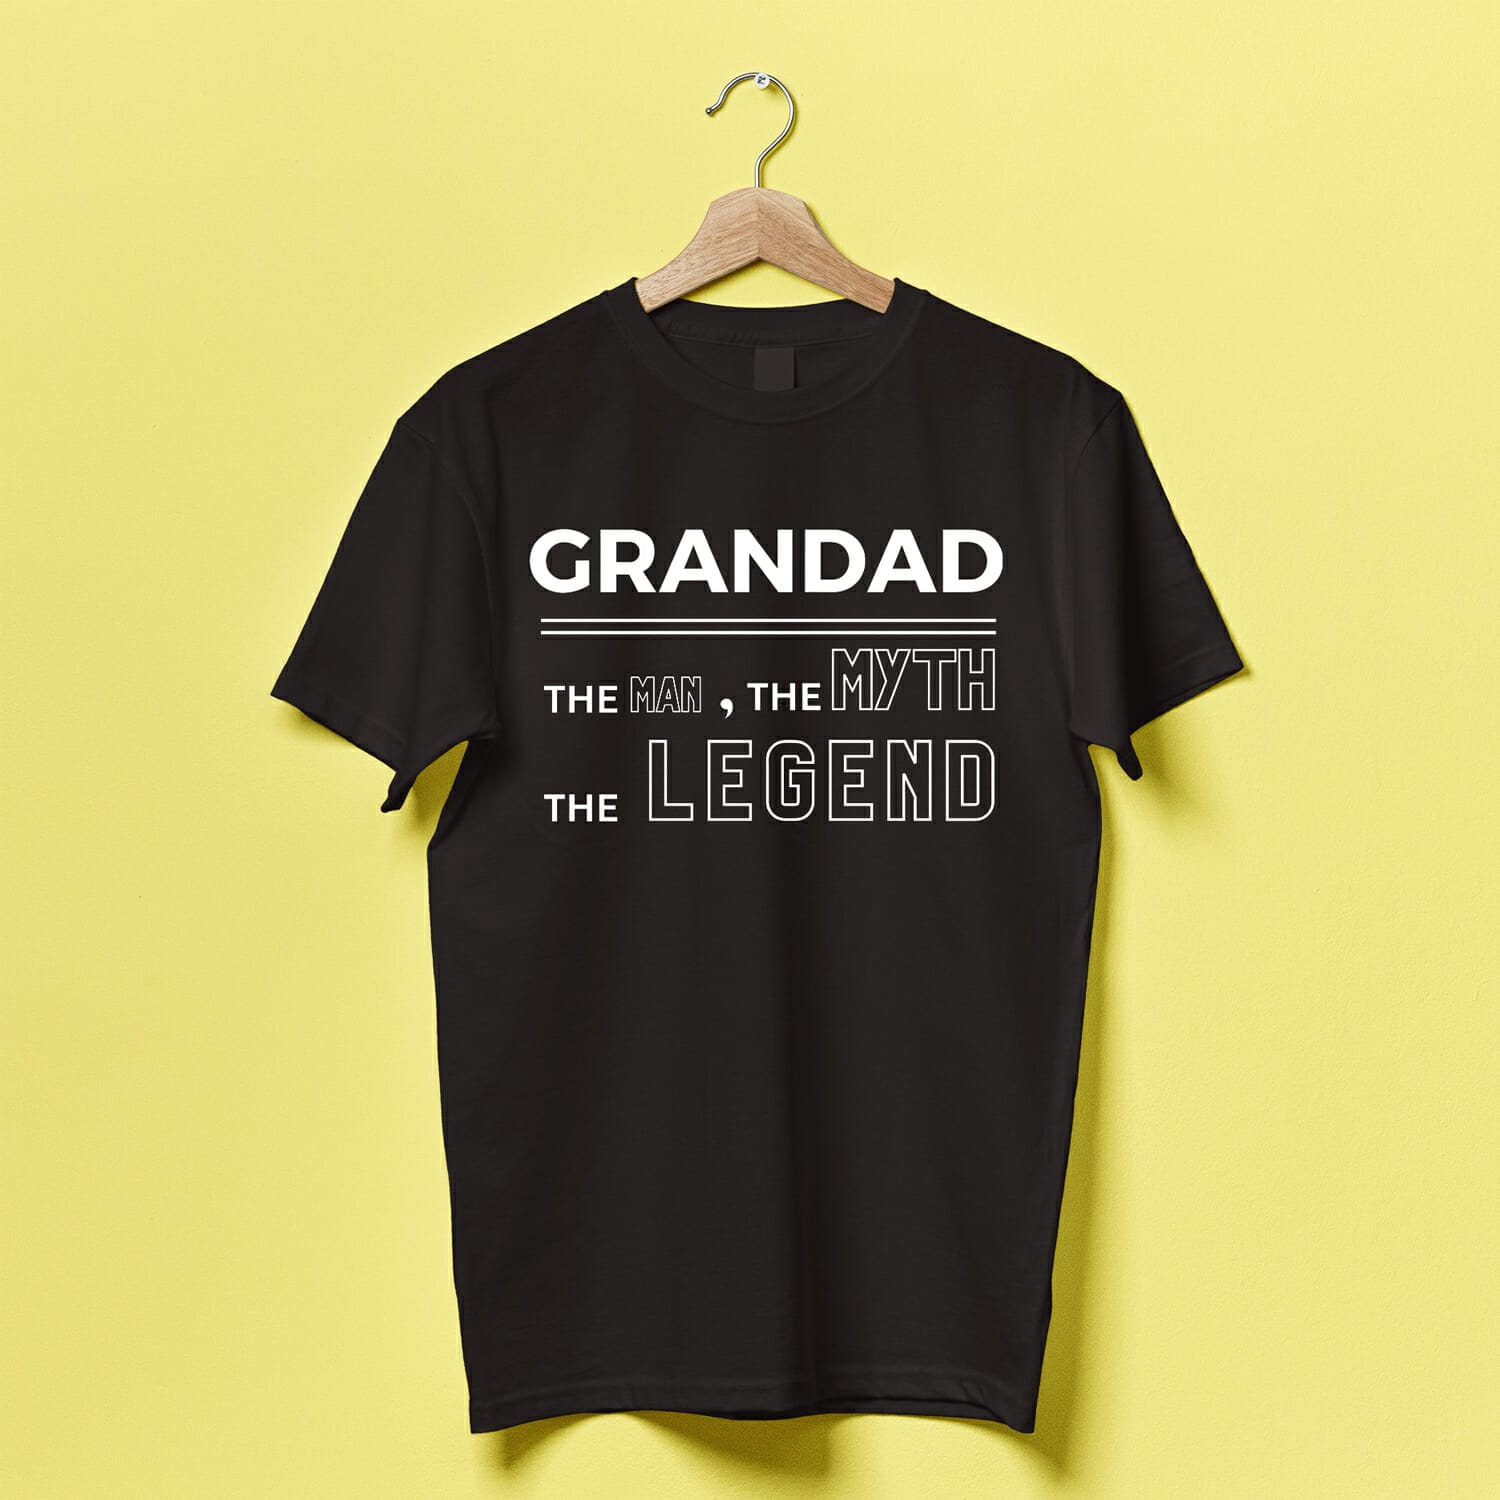 Grandad the man the myth the legend typography t-shirt design